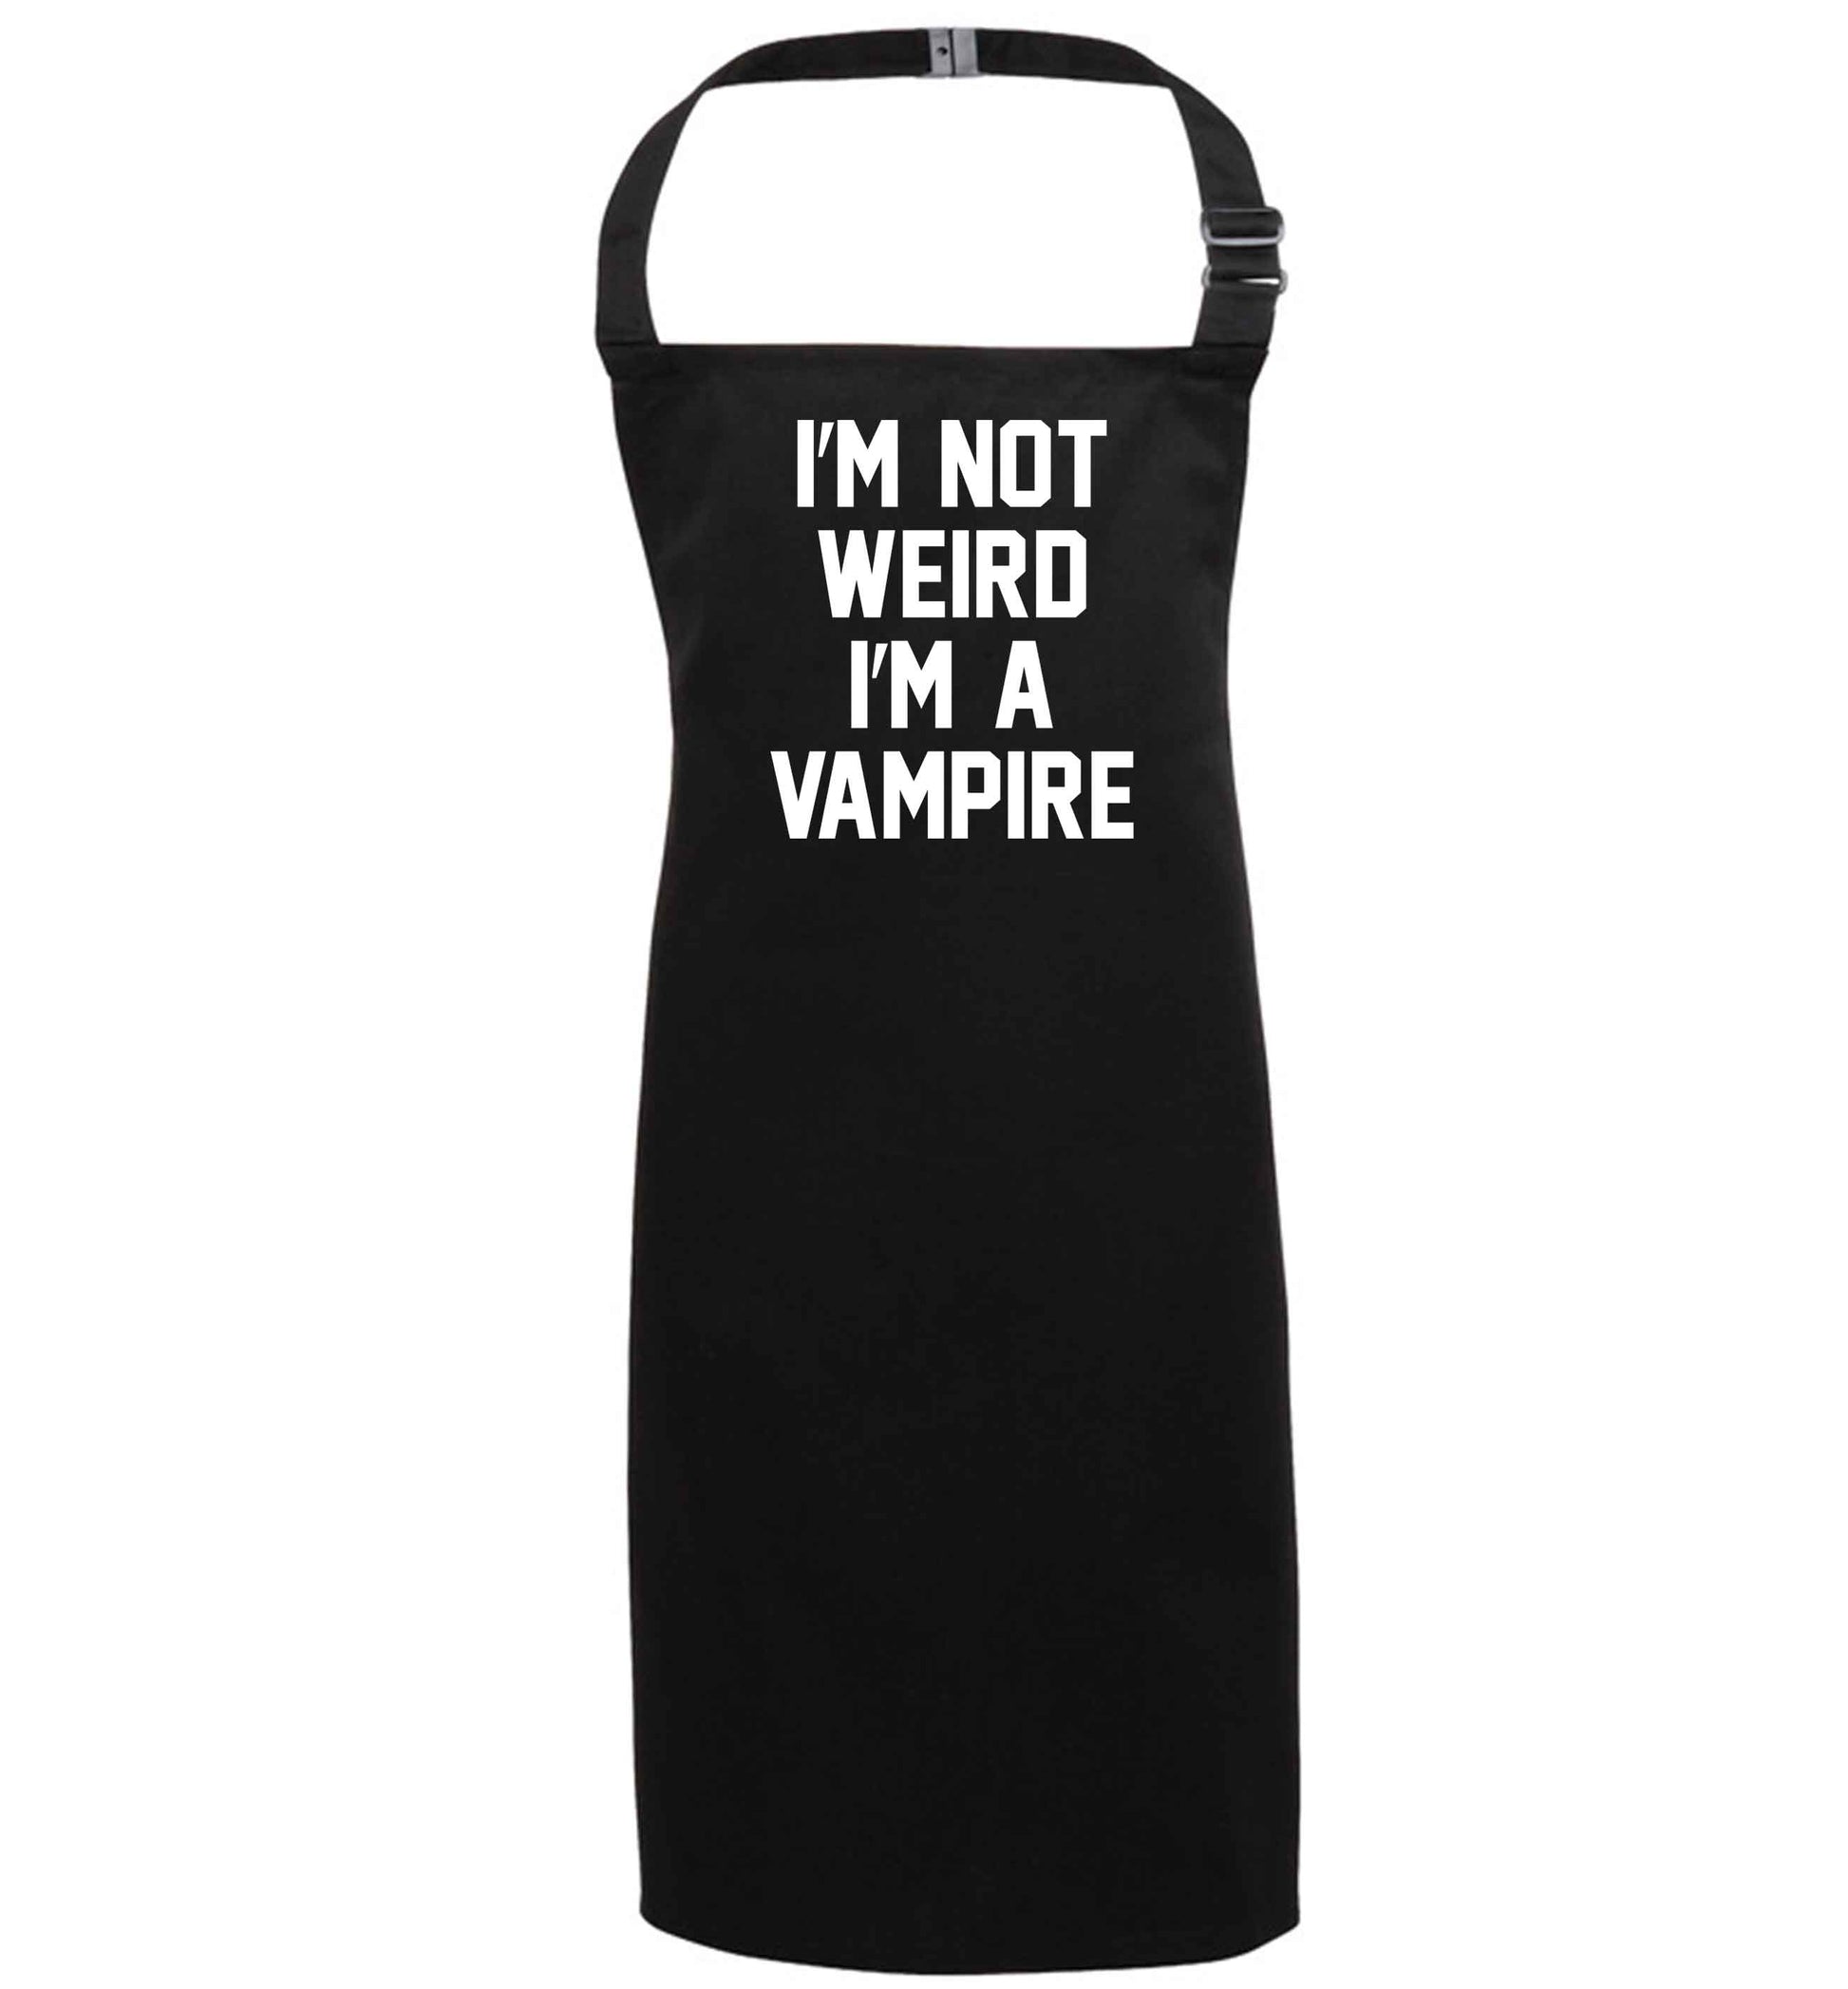 I'm not weird I'm a vampire black apron 7-10 years